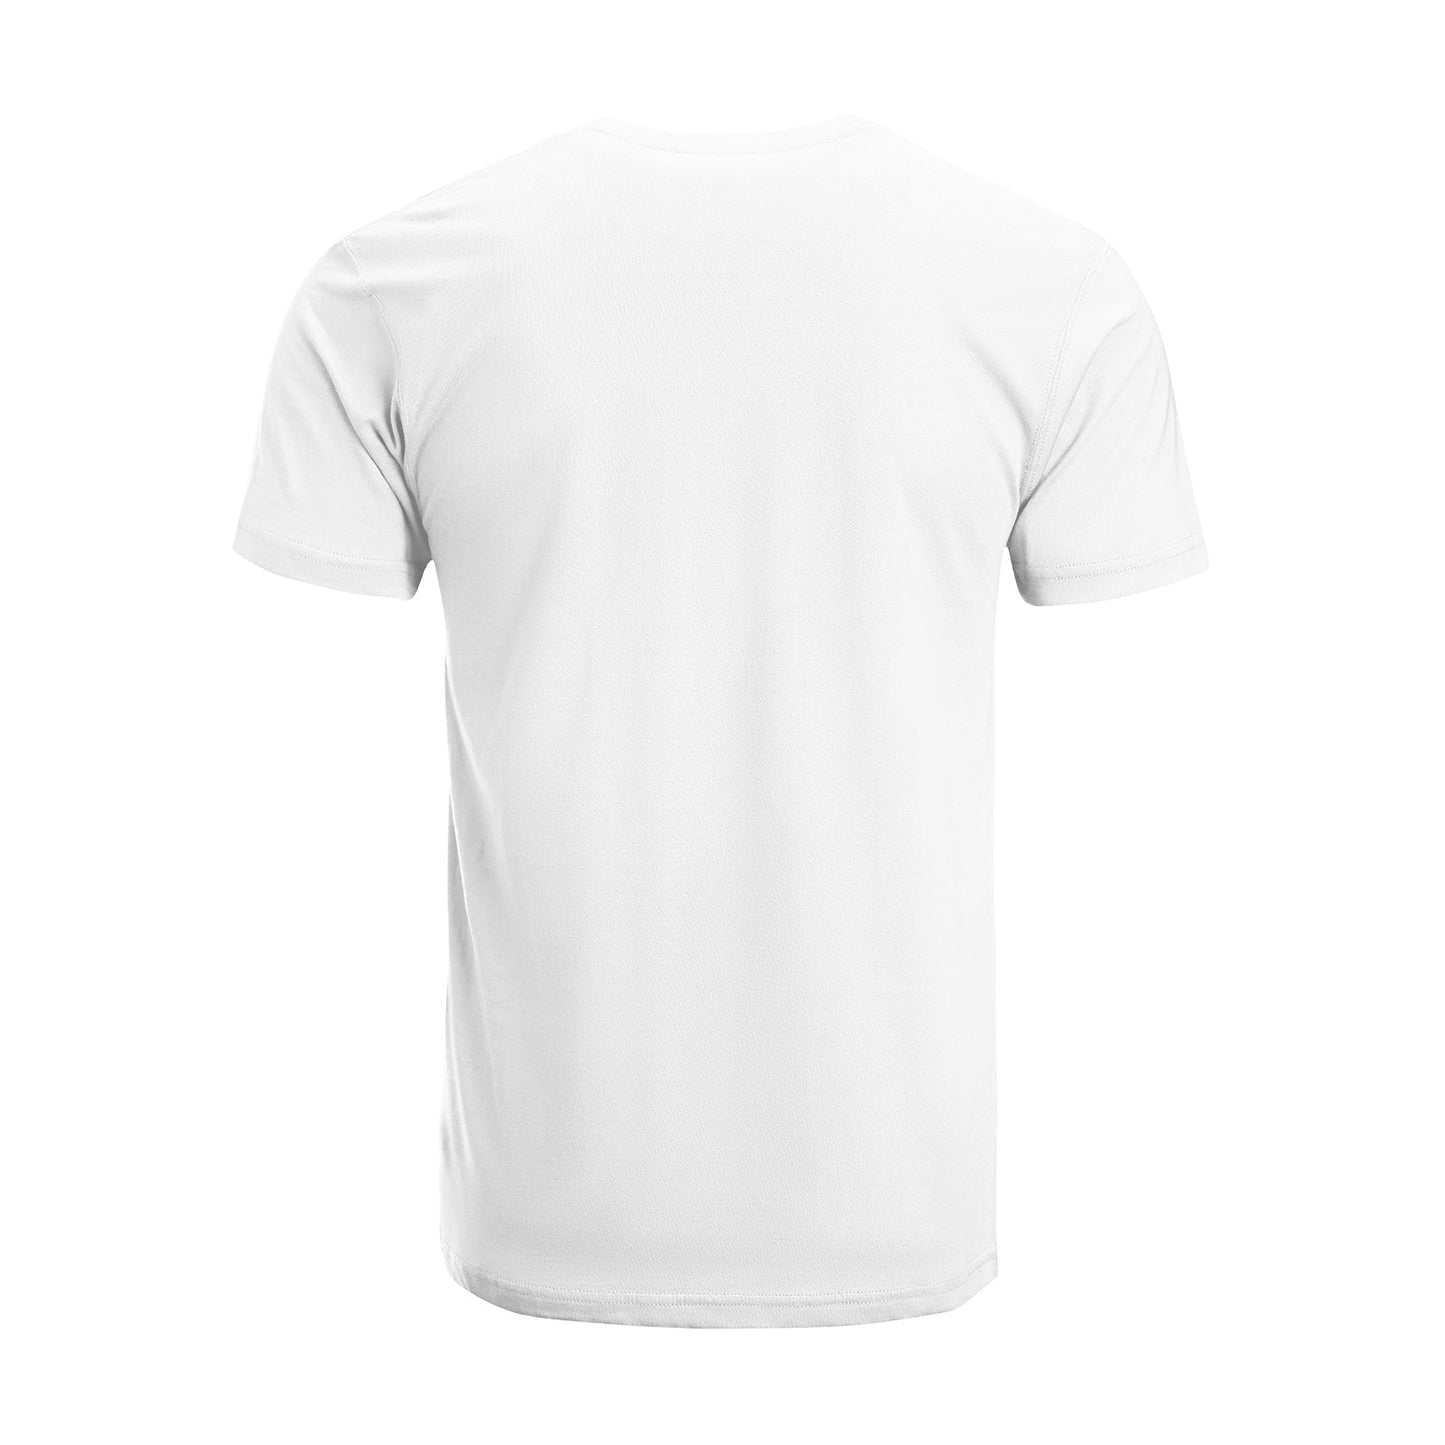 Unisex Short Sleeve Crew Neck Cotton Jersey T-Shirt USA 22